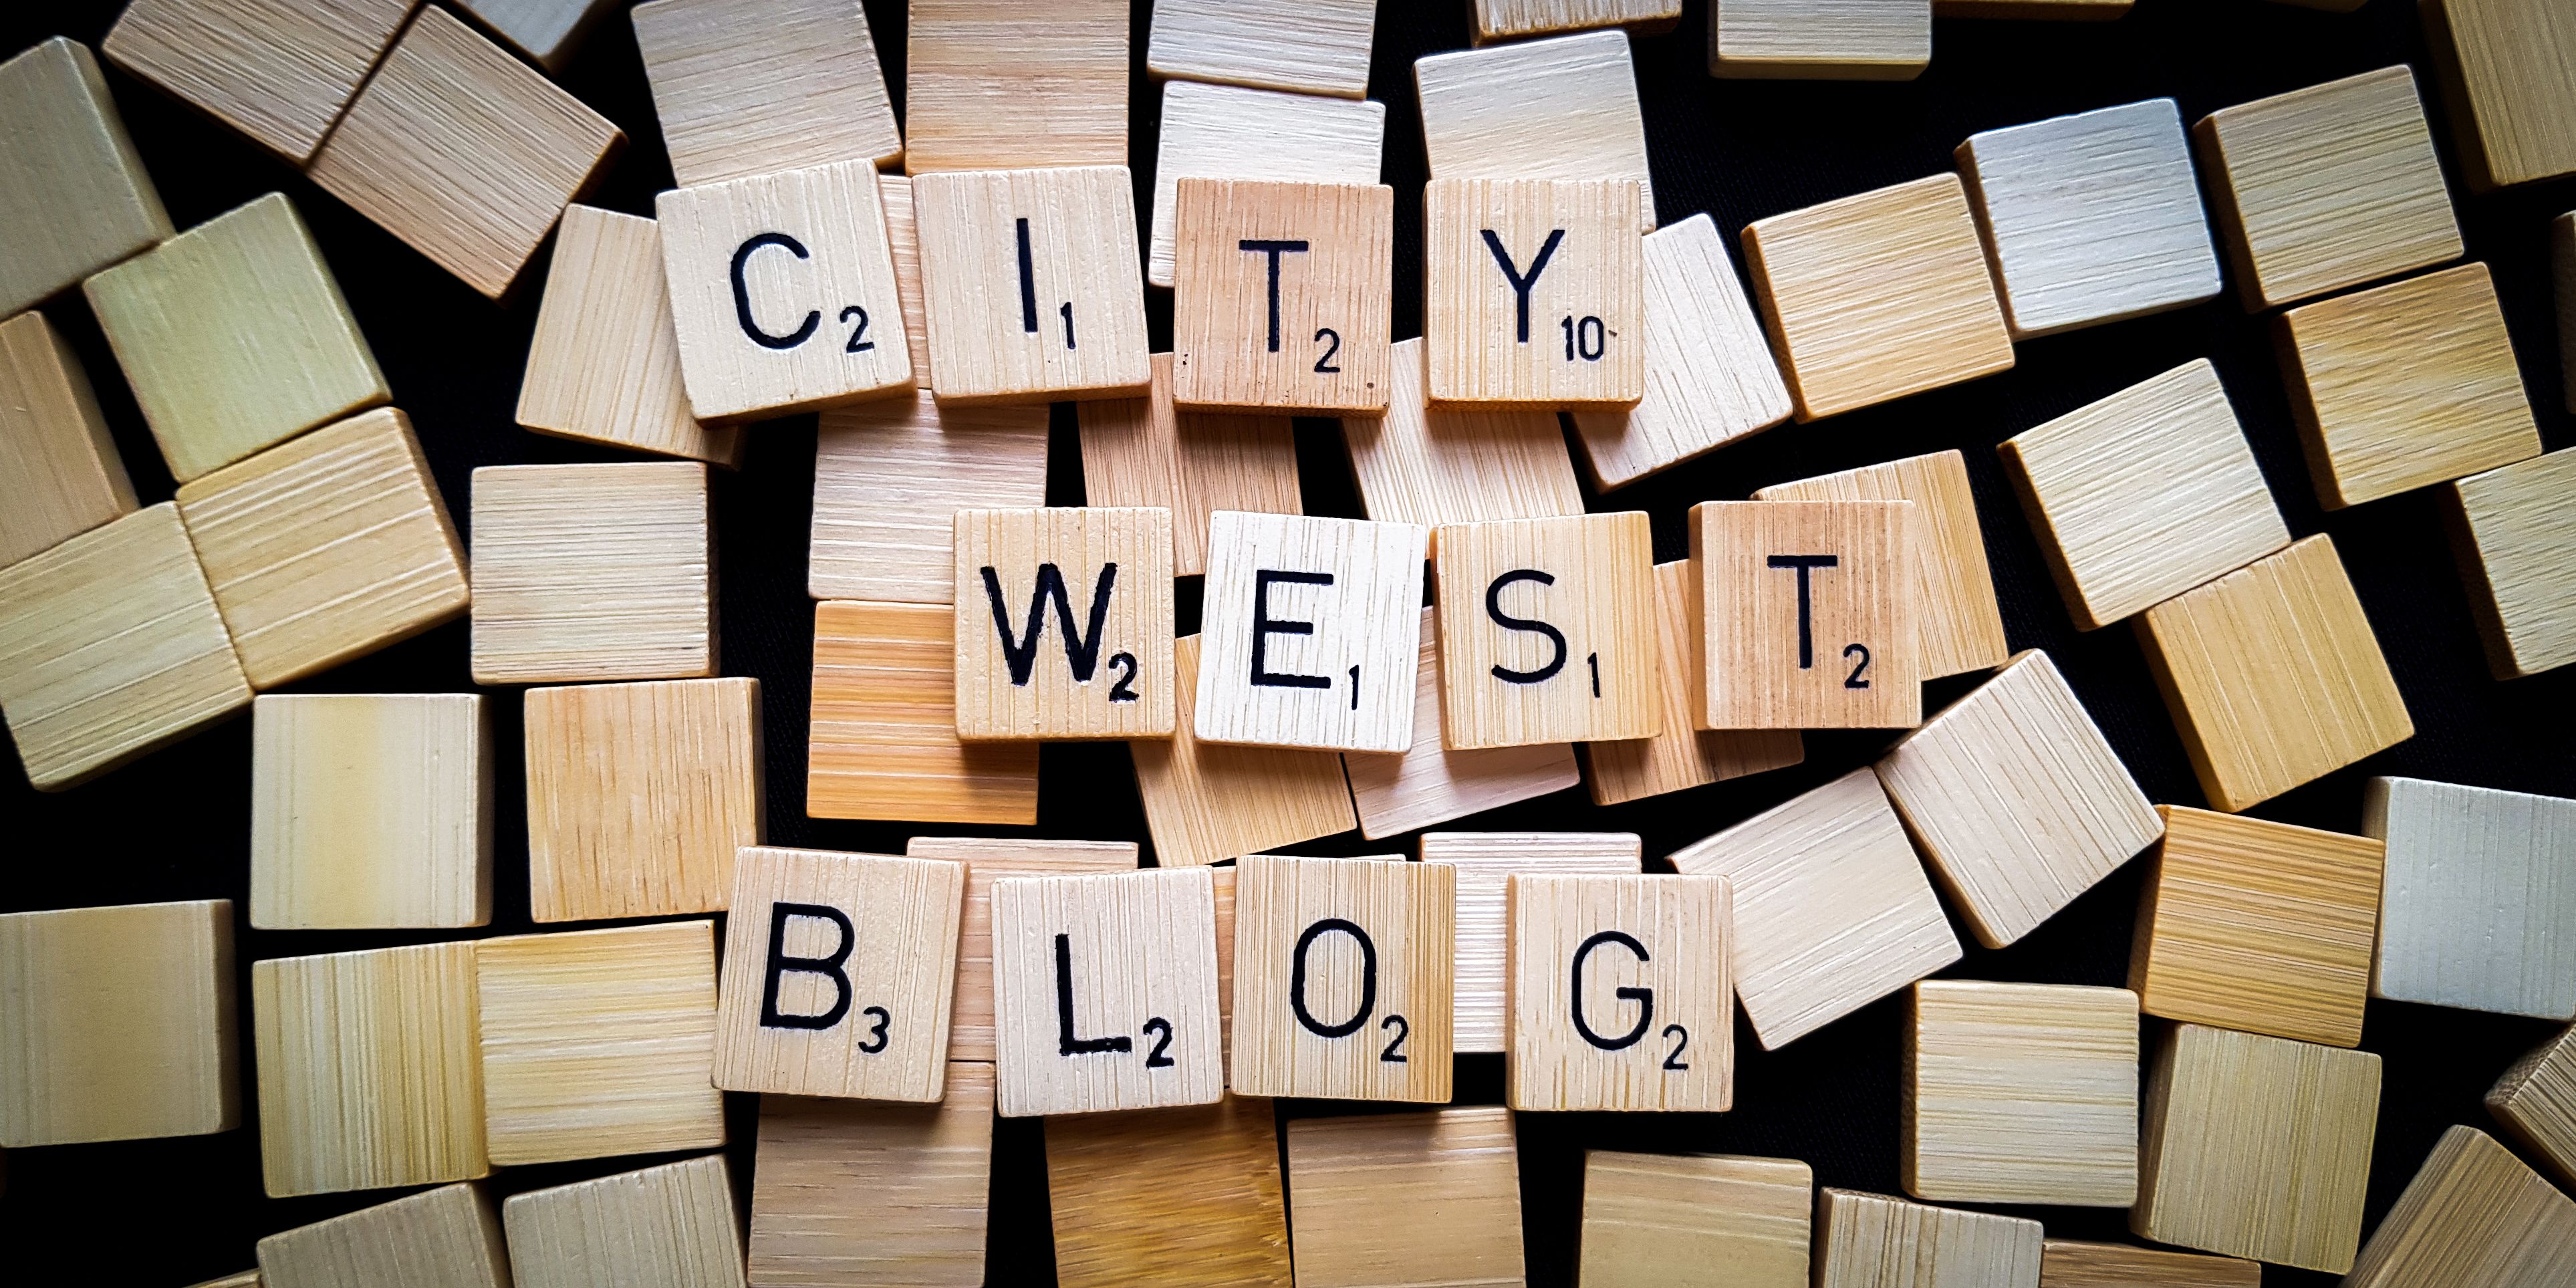 City West Blog